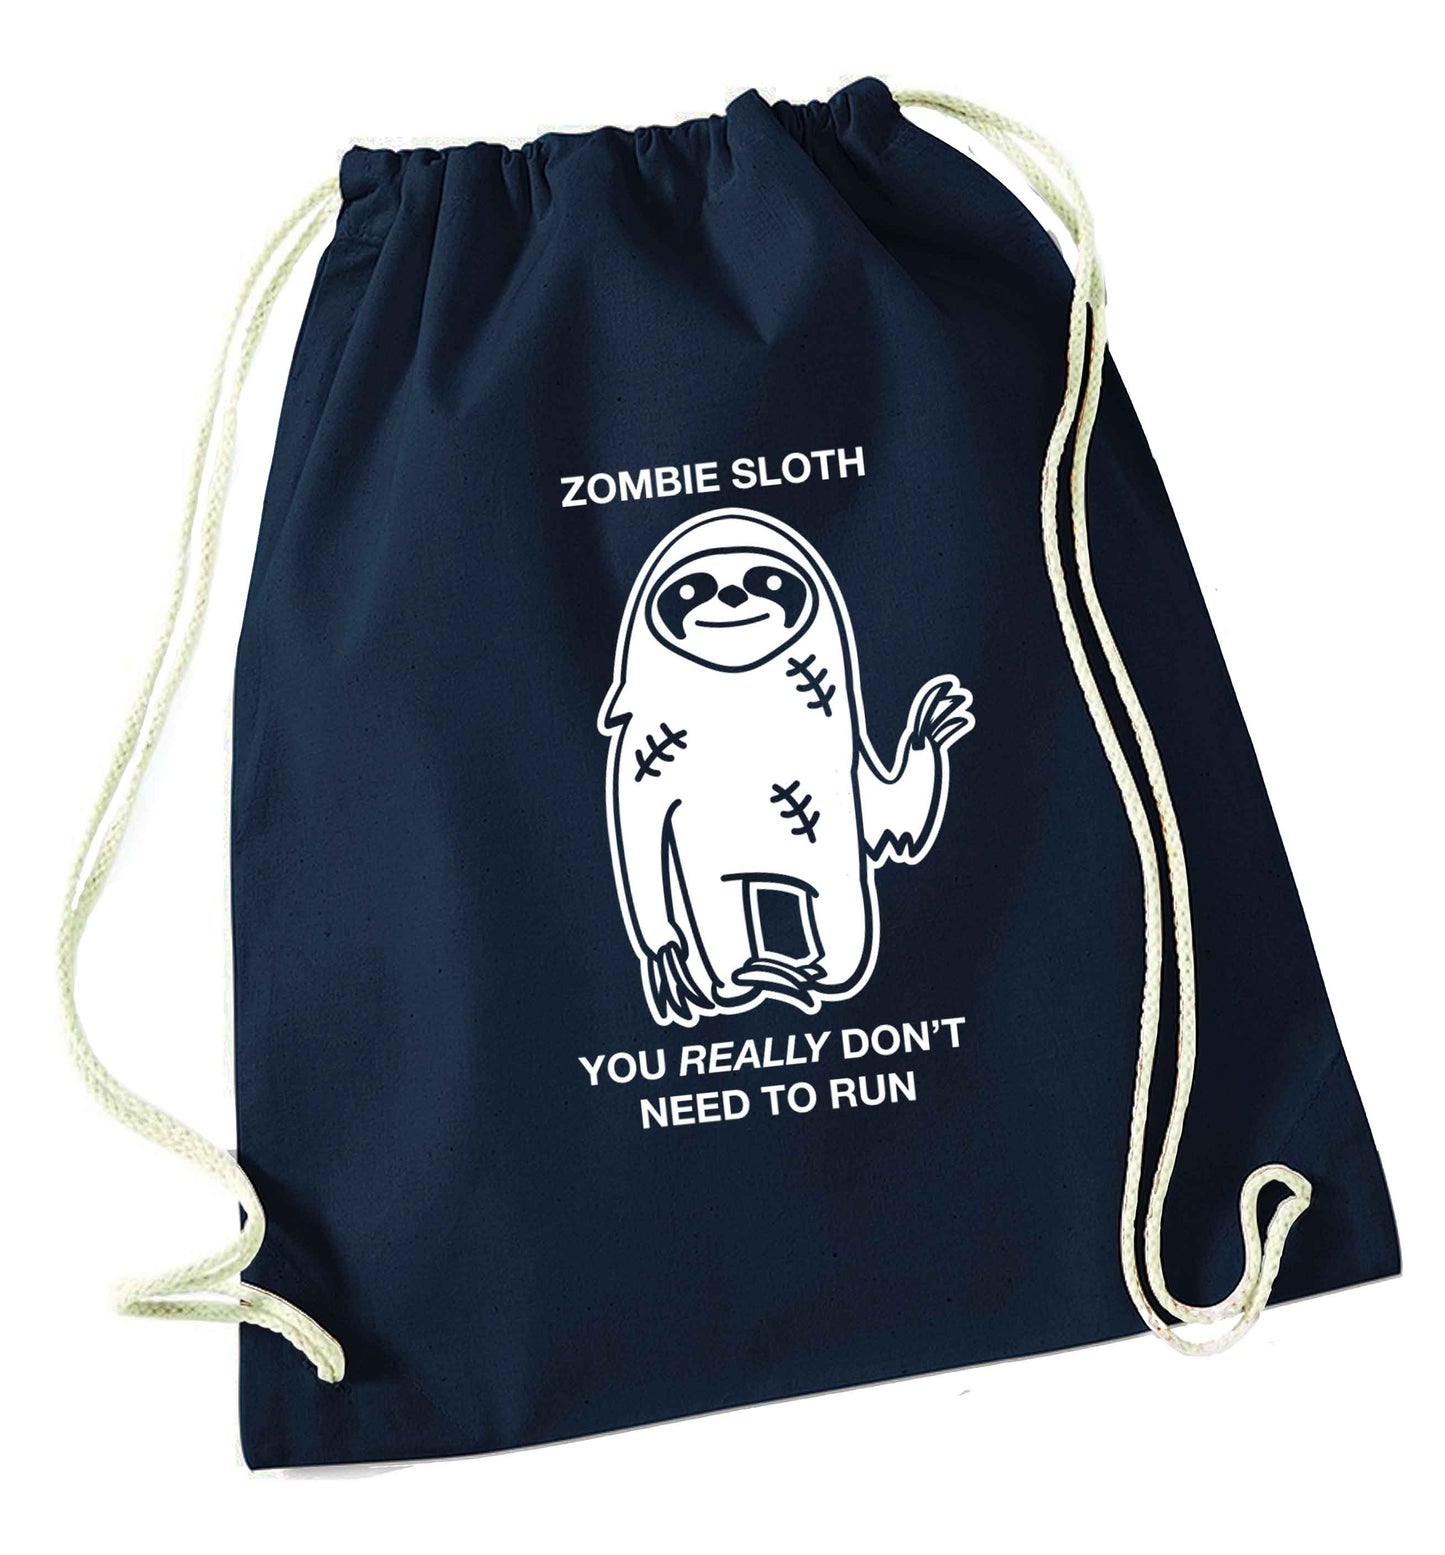 Zombie sloth you really don't need to run navy drawstring bag